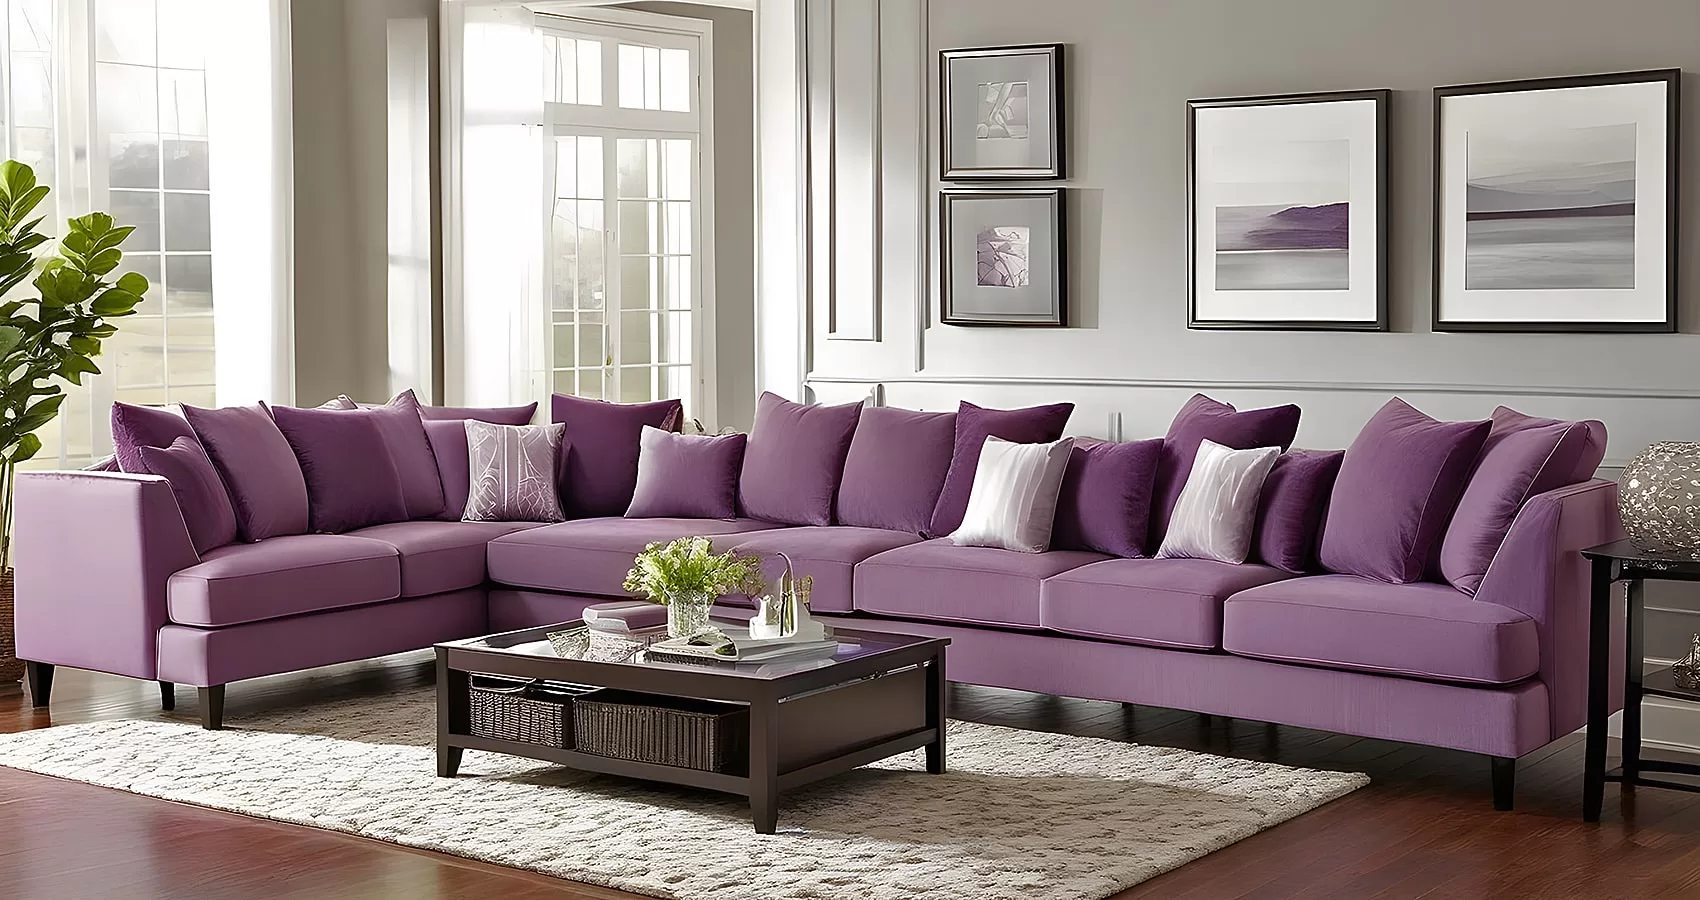 Light Purple Couch | Light Purple Sofa Living Room